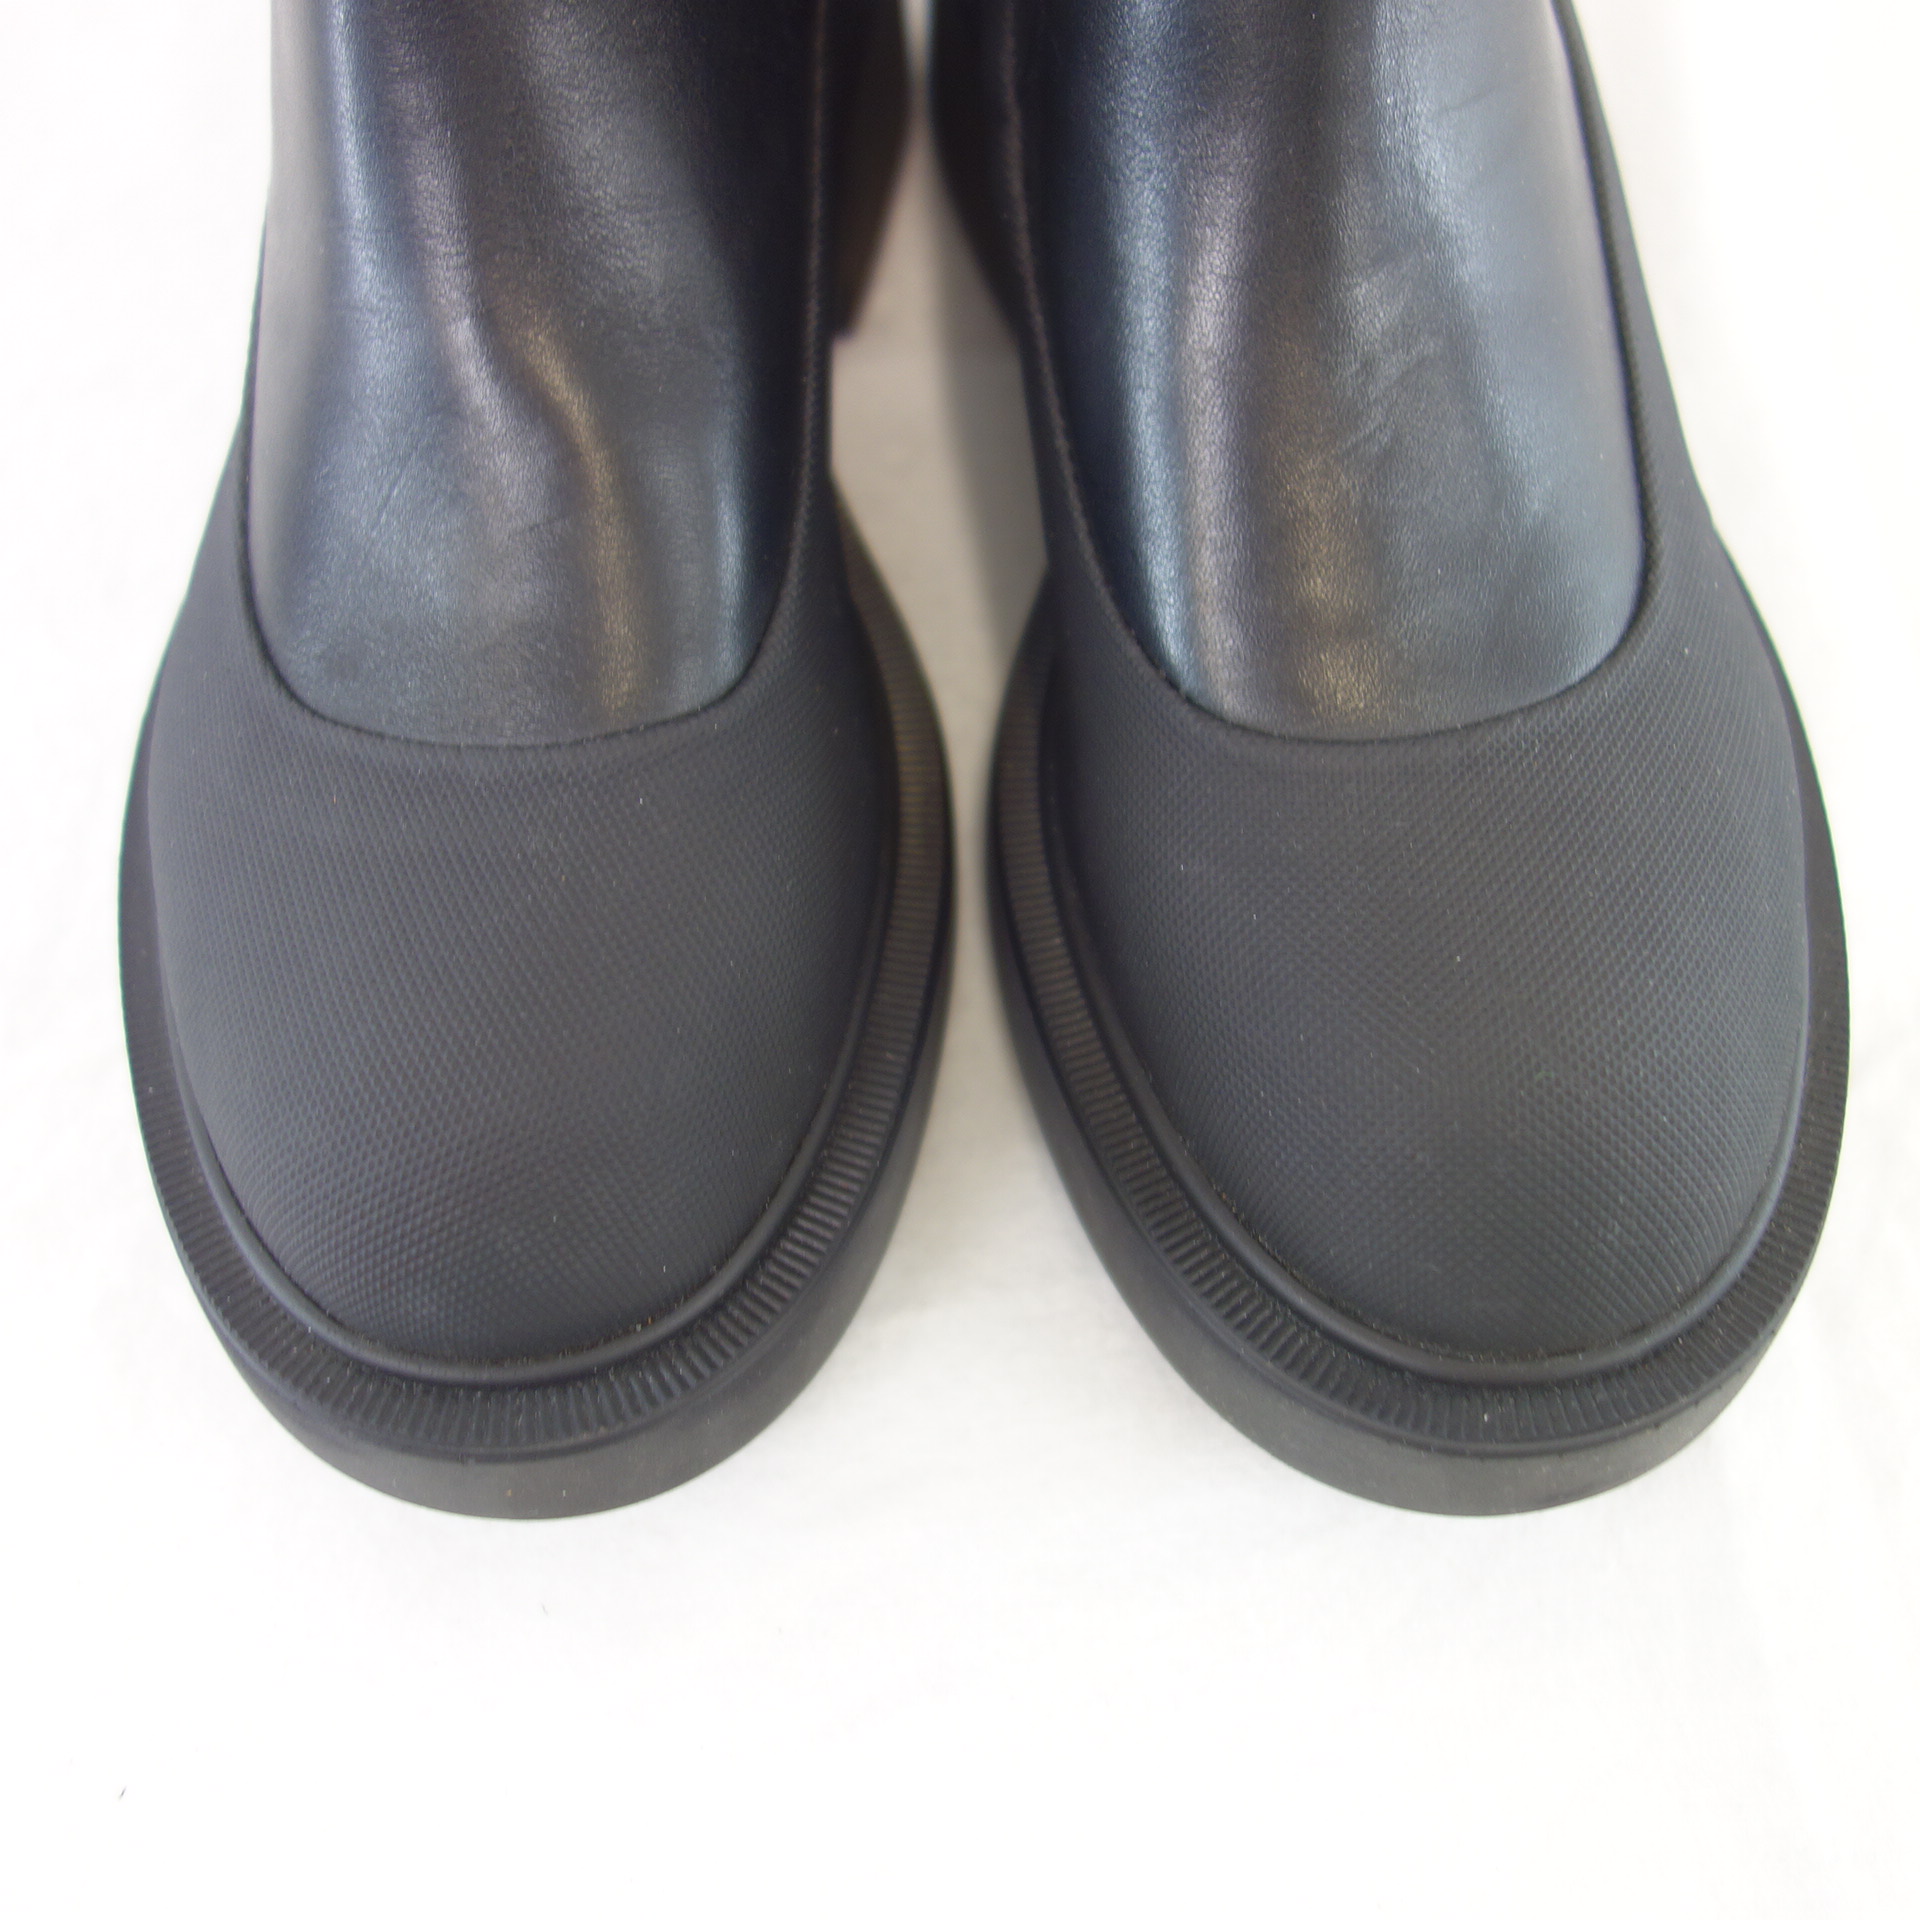 BUKELA Damen Schuhe Stiefel Boots Schwarz Leder Blockabsatz Gr 37